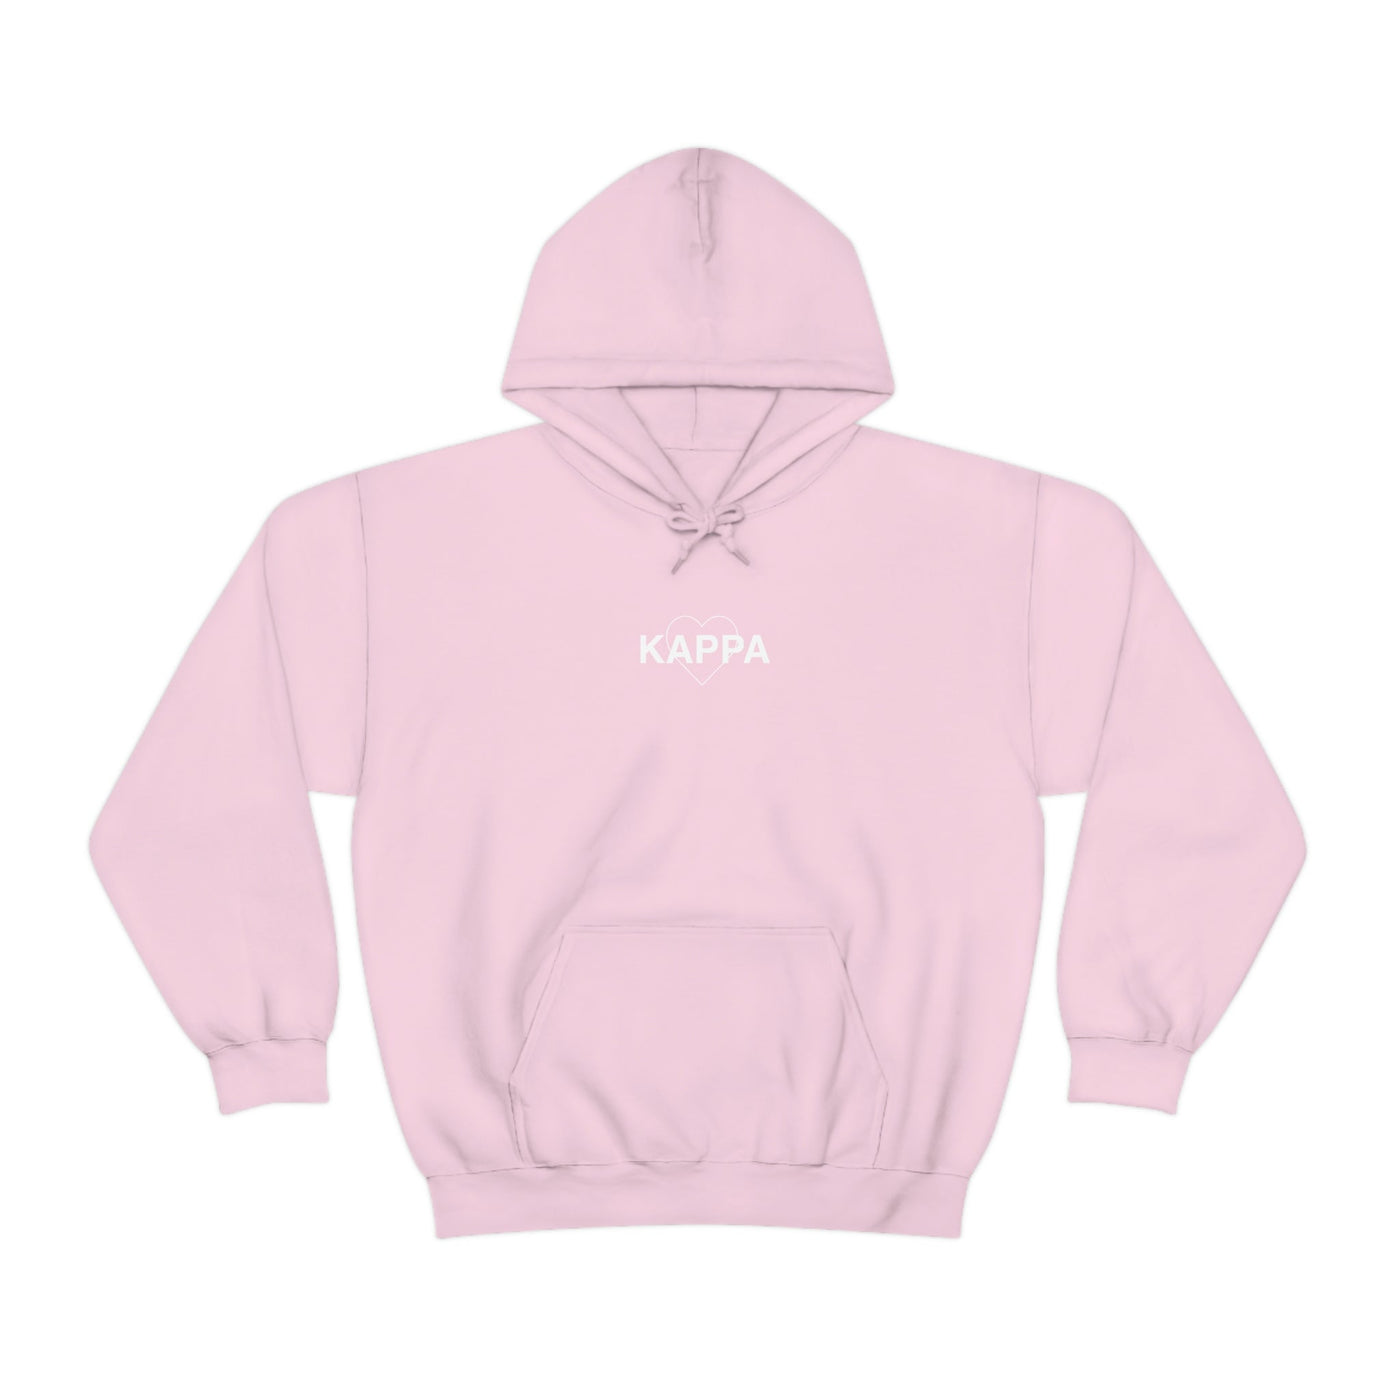 Kappa Kappa Gamma Say It Back Sorority Sweatshirt, KKG Sorority Hoodie